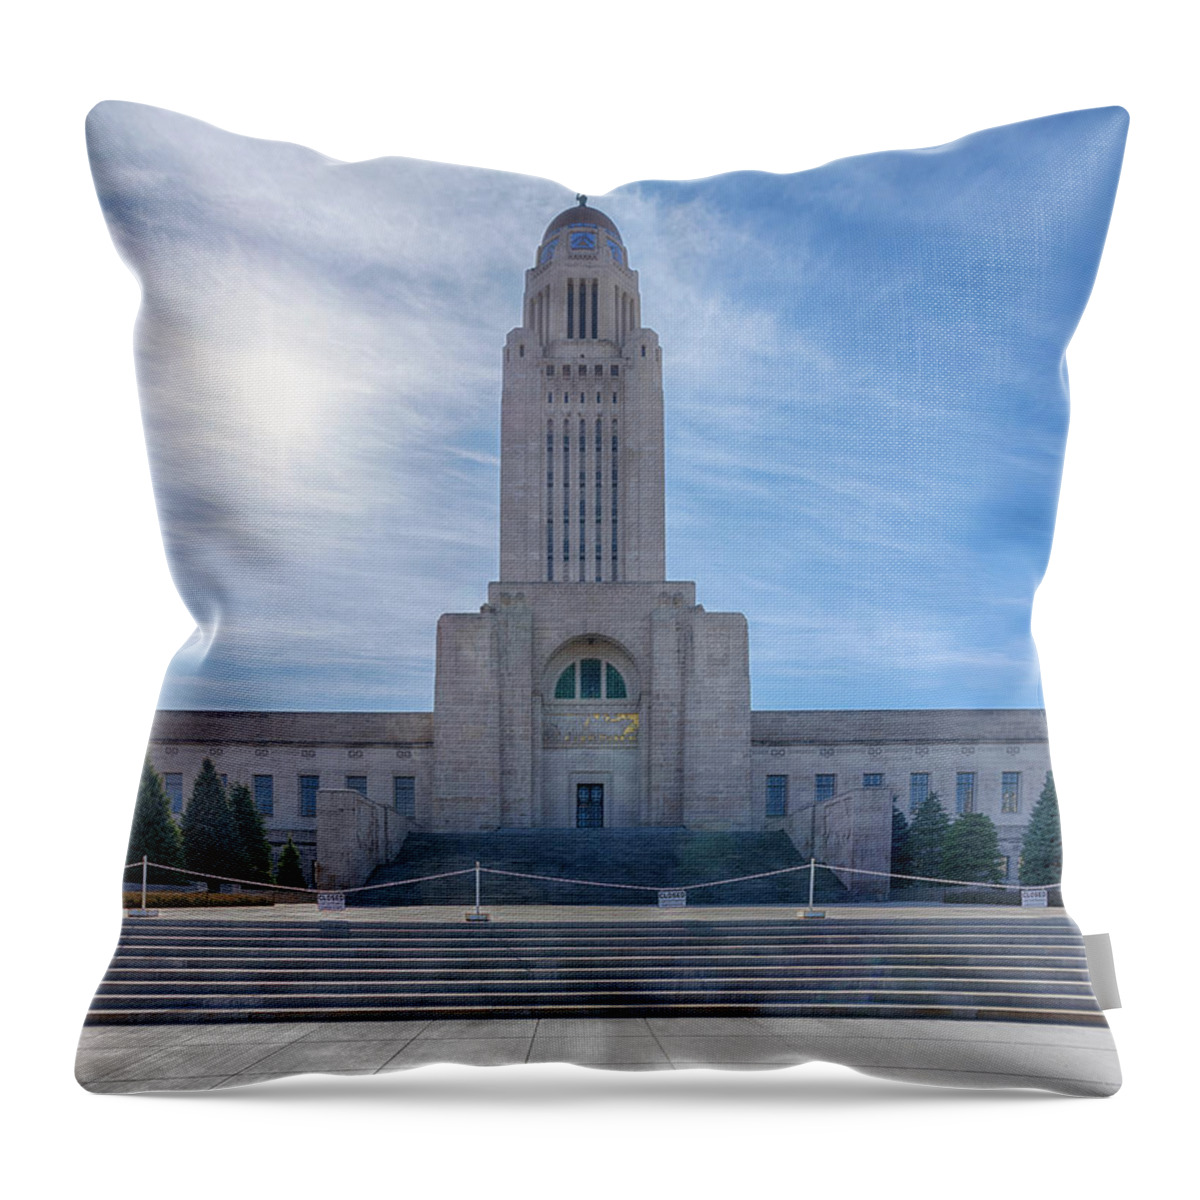 Nebraska State Capitol Throw Pillow featuring the photograph Nebraska State Capitol by Susan Rissi Tregoning